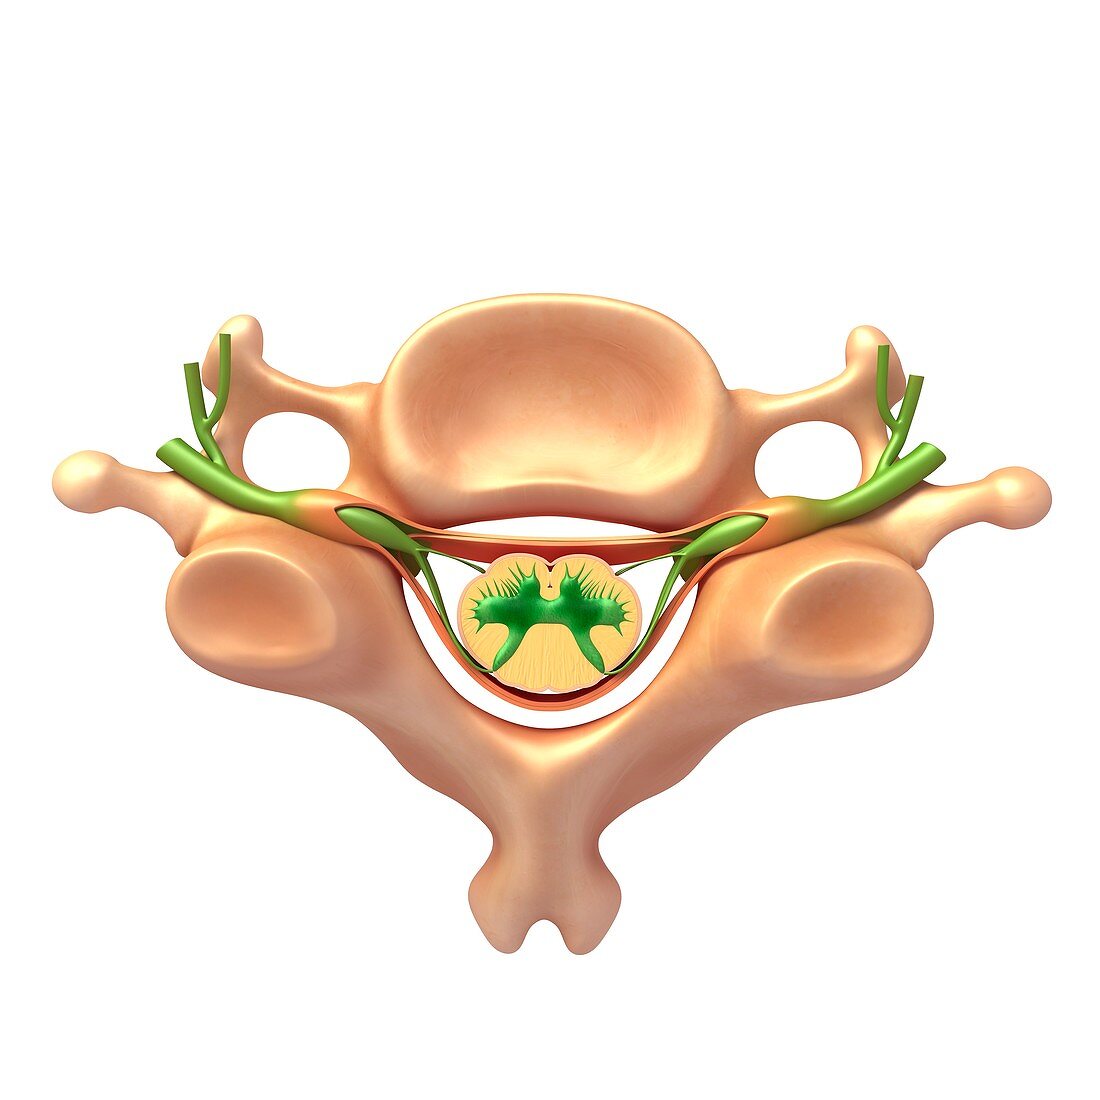 Human vertebral structure,illustration